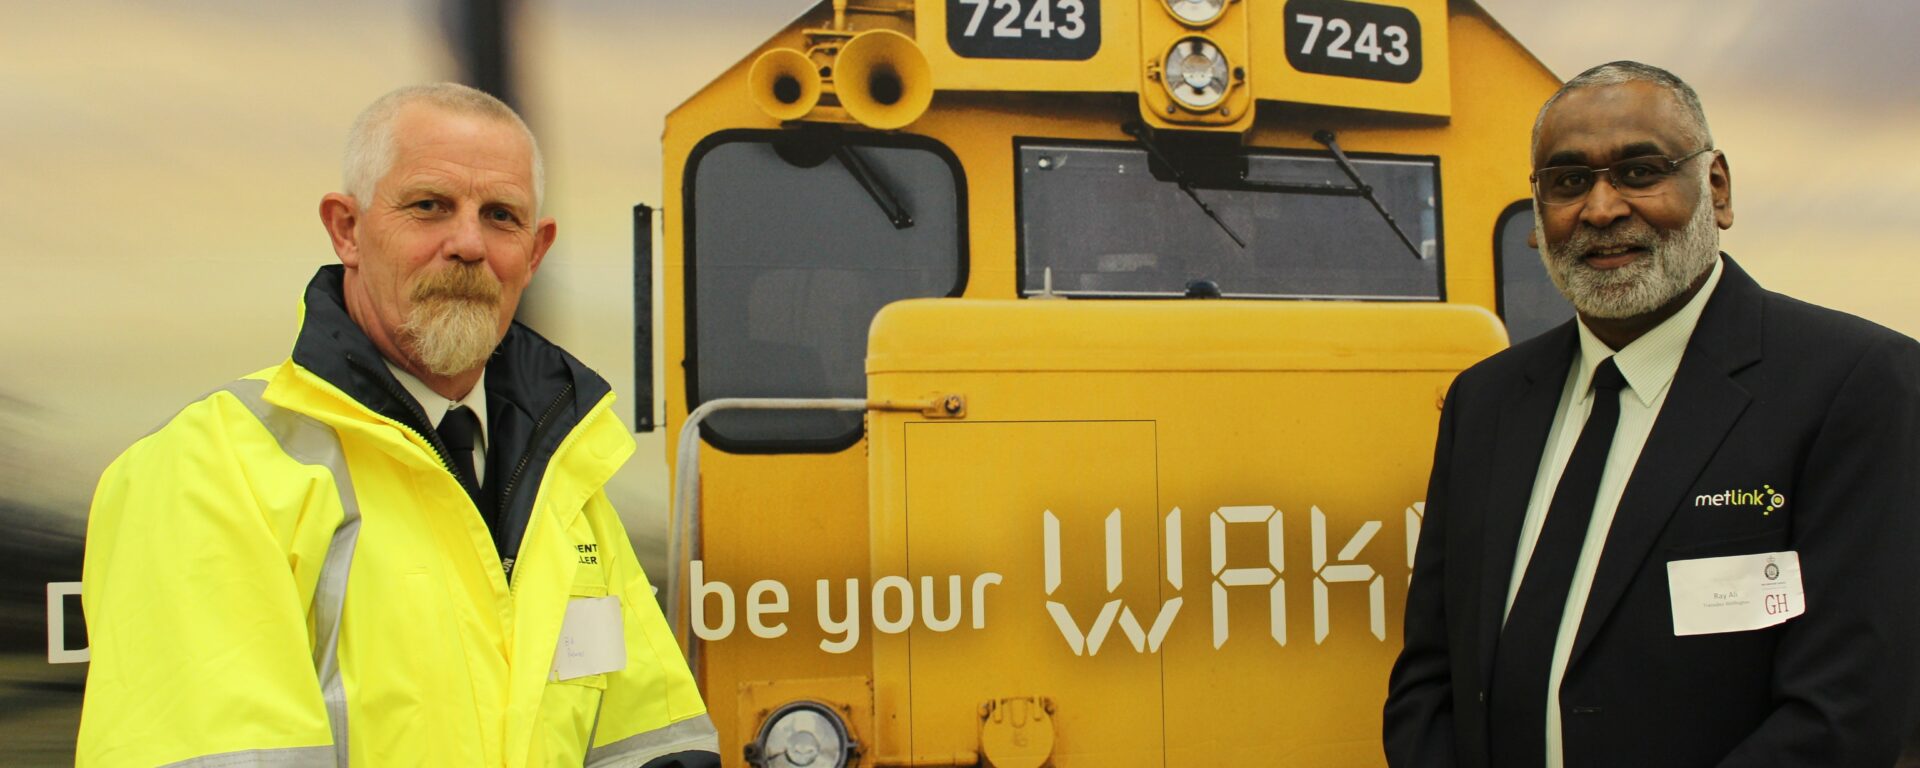 wellington_rail-safety-week